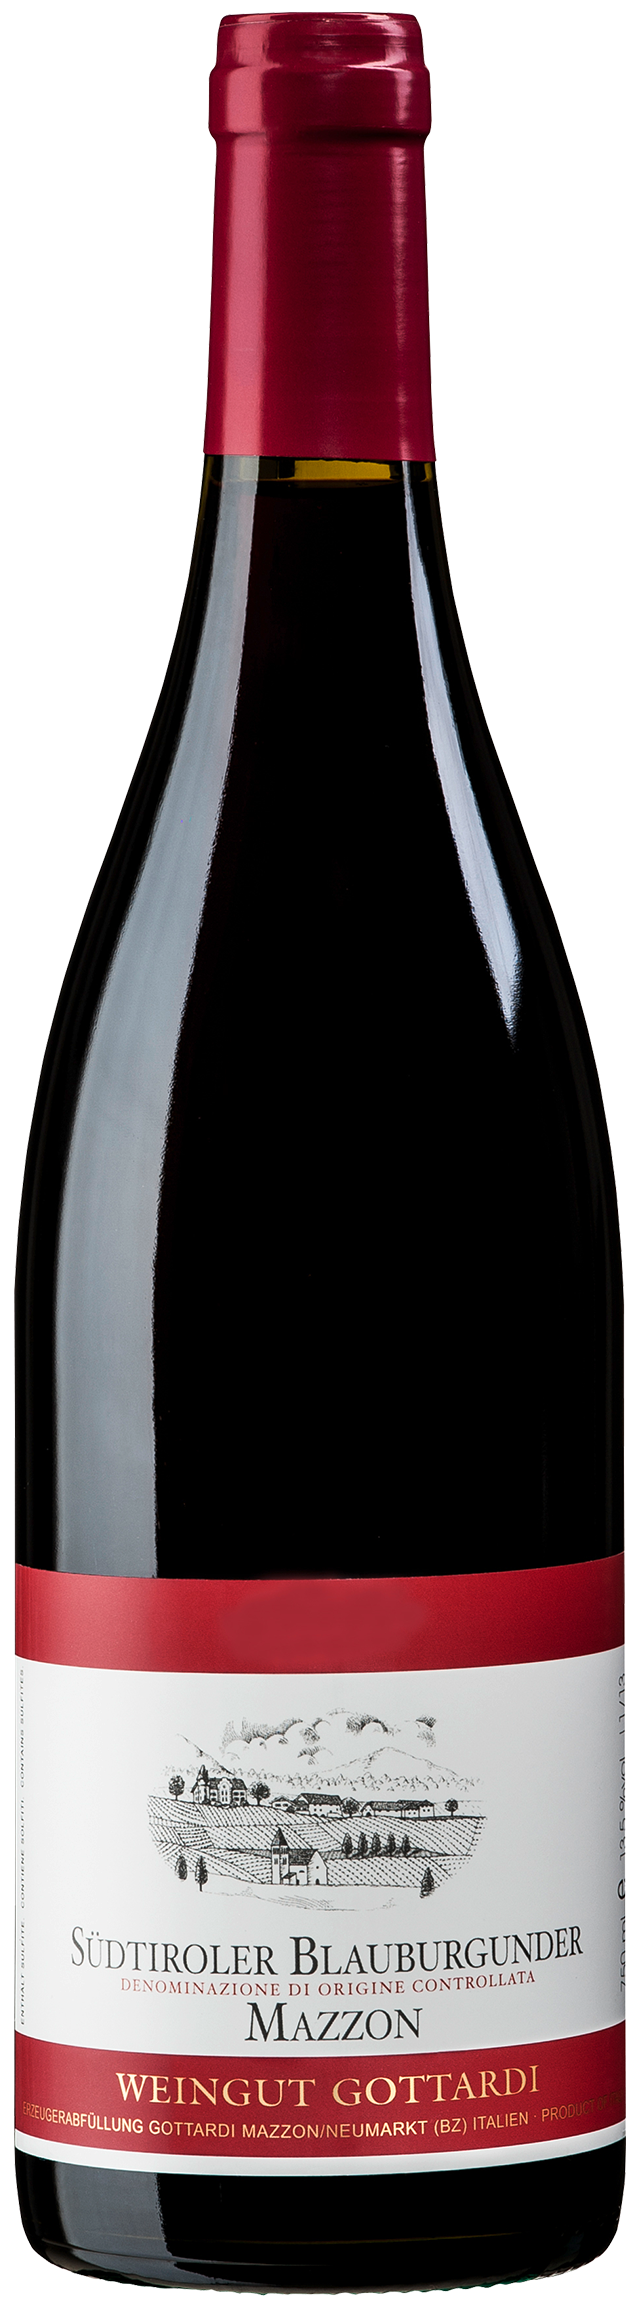 Pinot Nero Alto Adige 2019 - Weingut Gottardi Mazzon